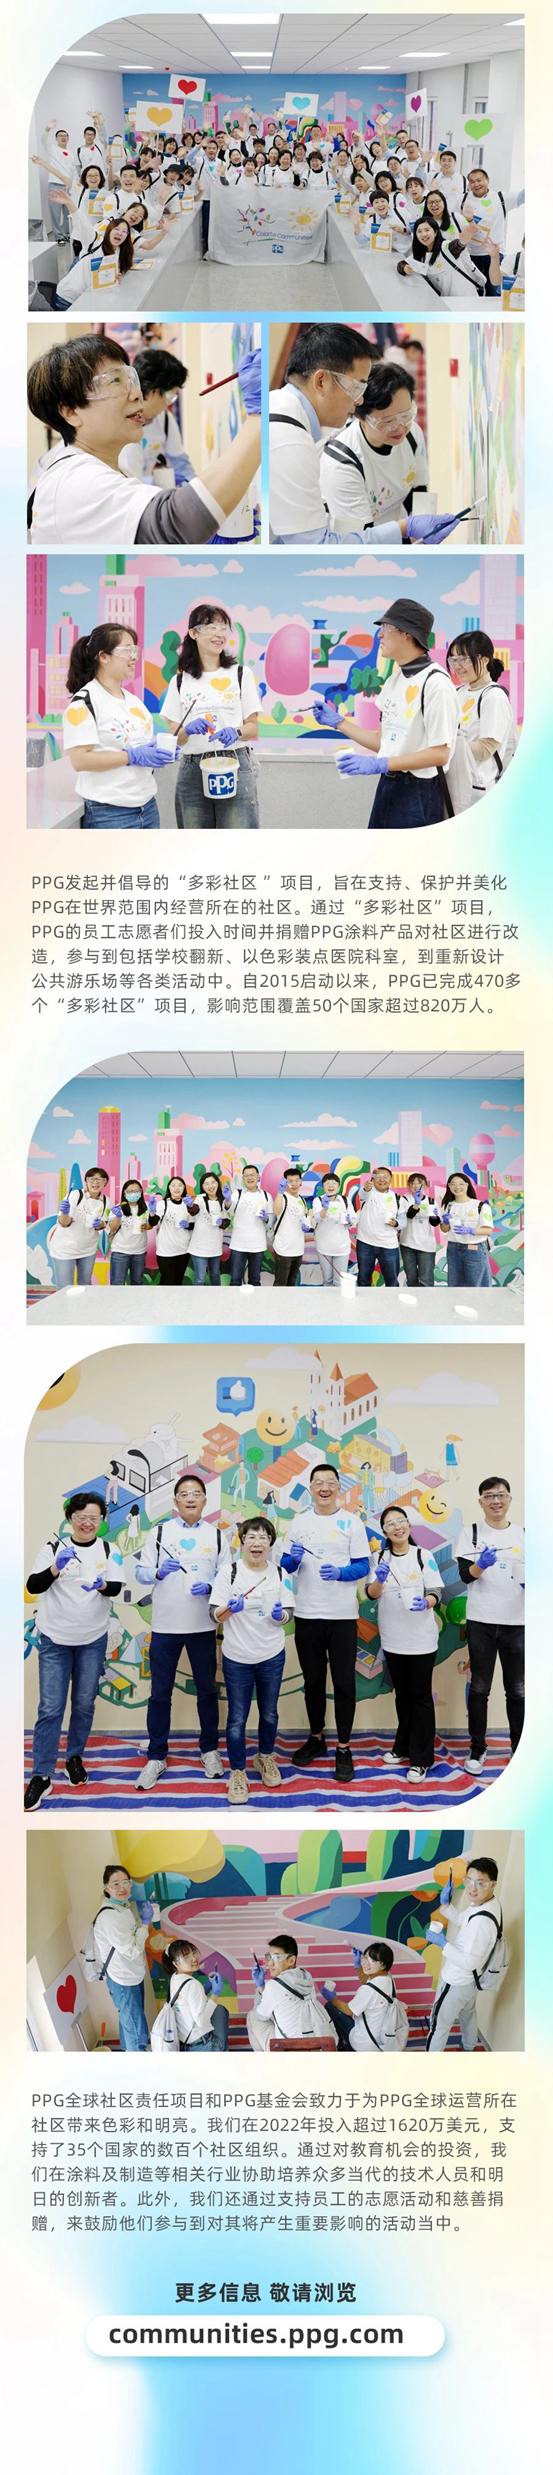 PPG“多彩社区”活动走进天津市泰达贝肯山社区，打造以人为本的美好生活